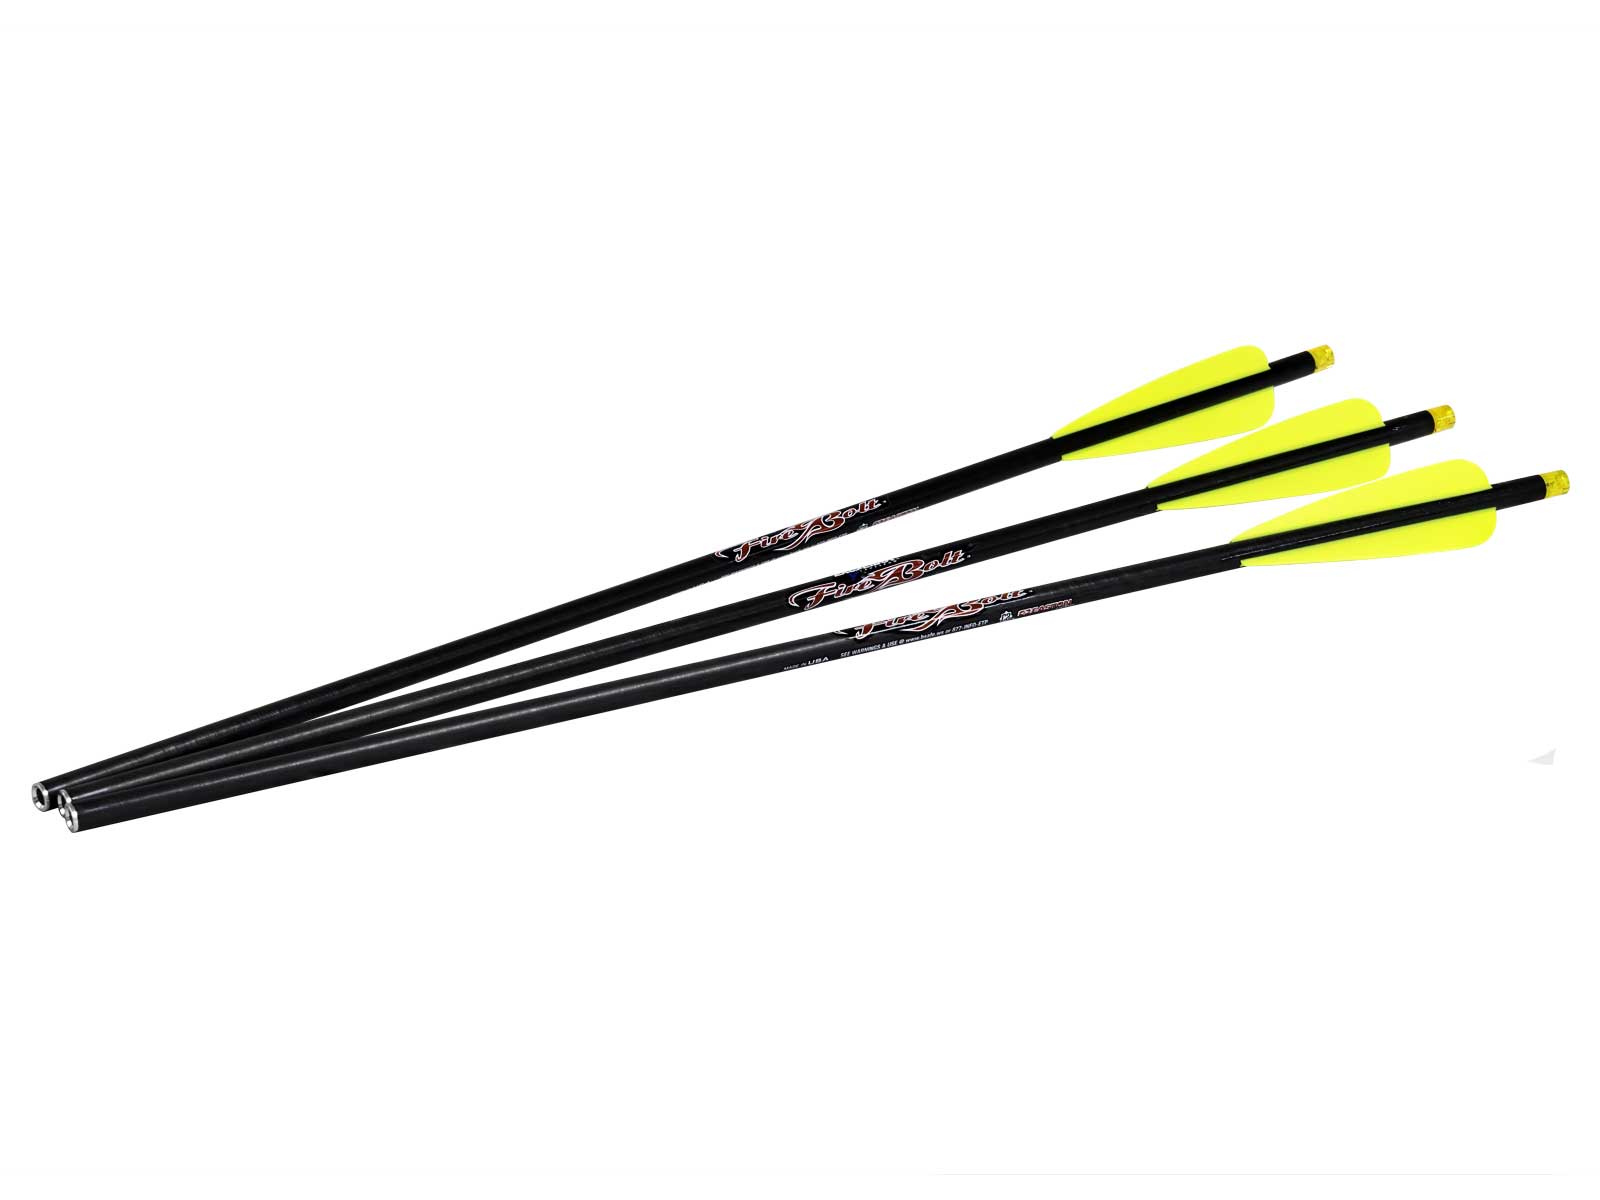 Excalibur Firebolt Illuminated Carbon Arrows  20